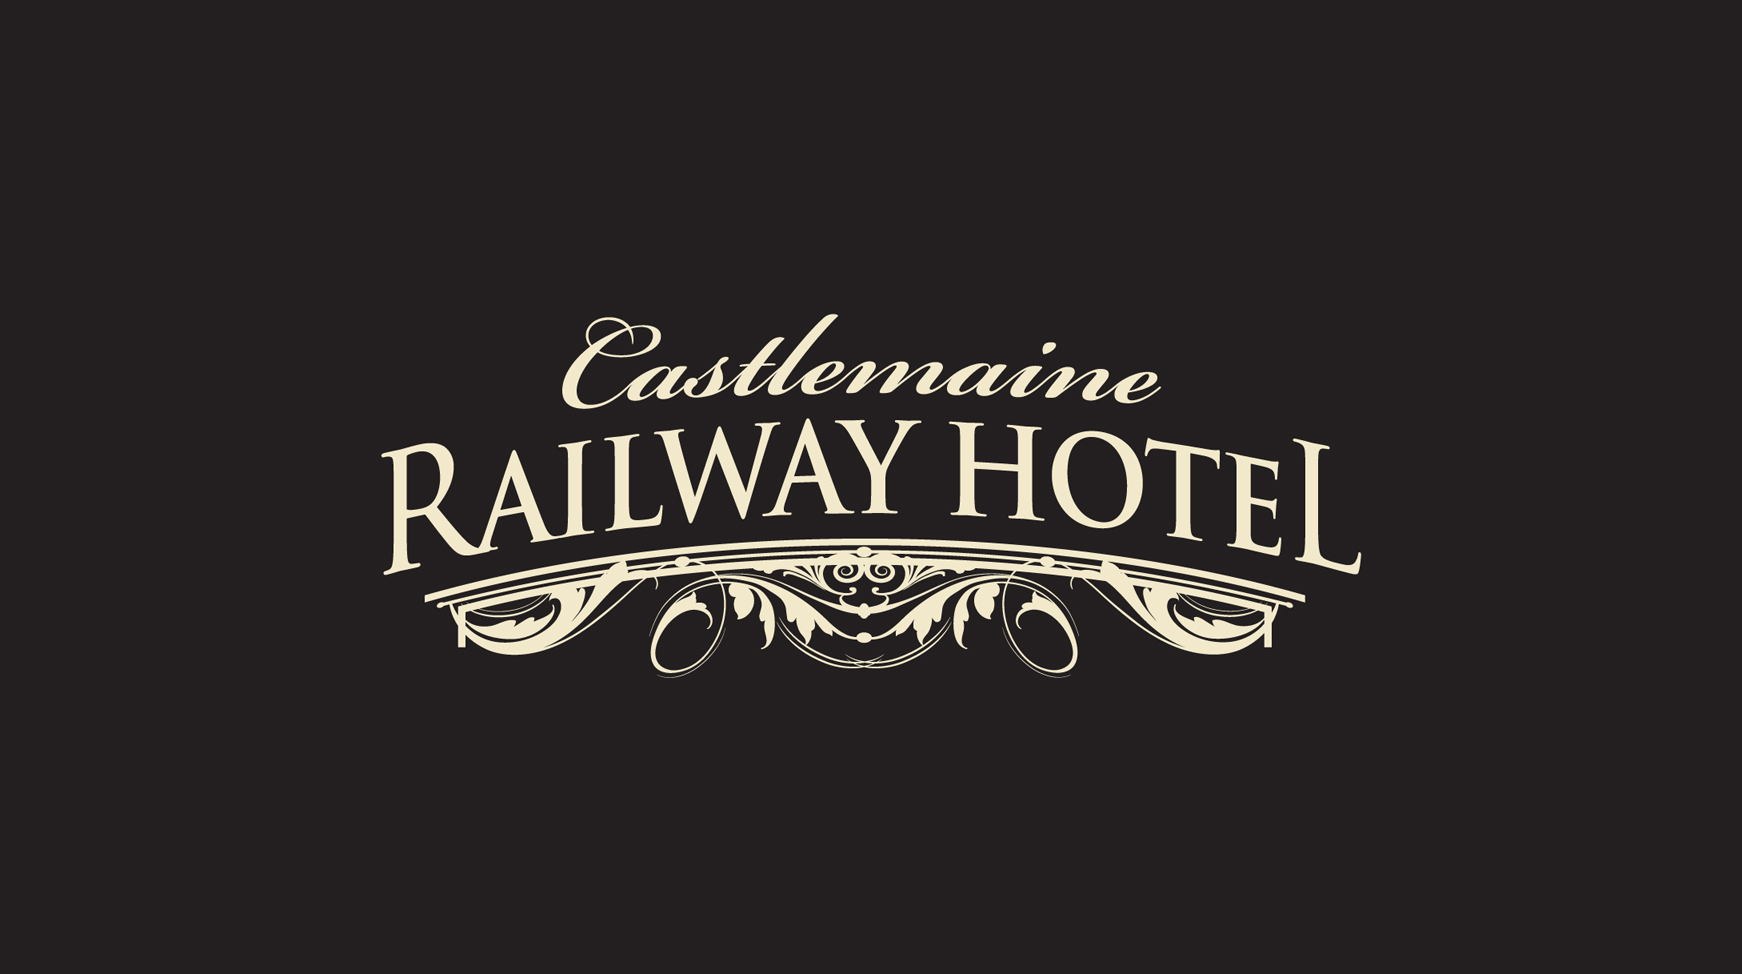 Railway Hotel Castlemaine - Yamba Accommodation